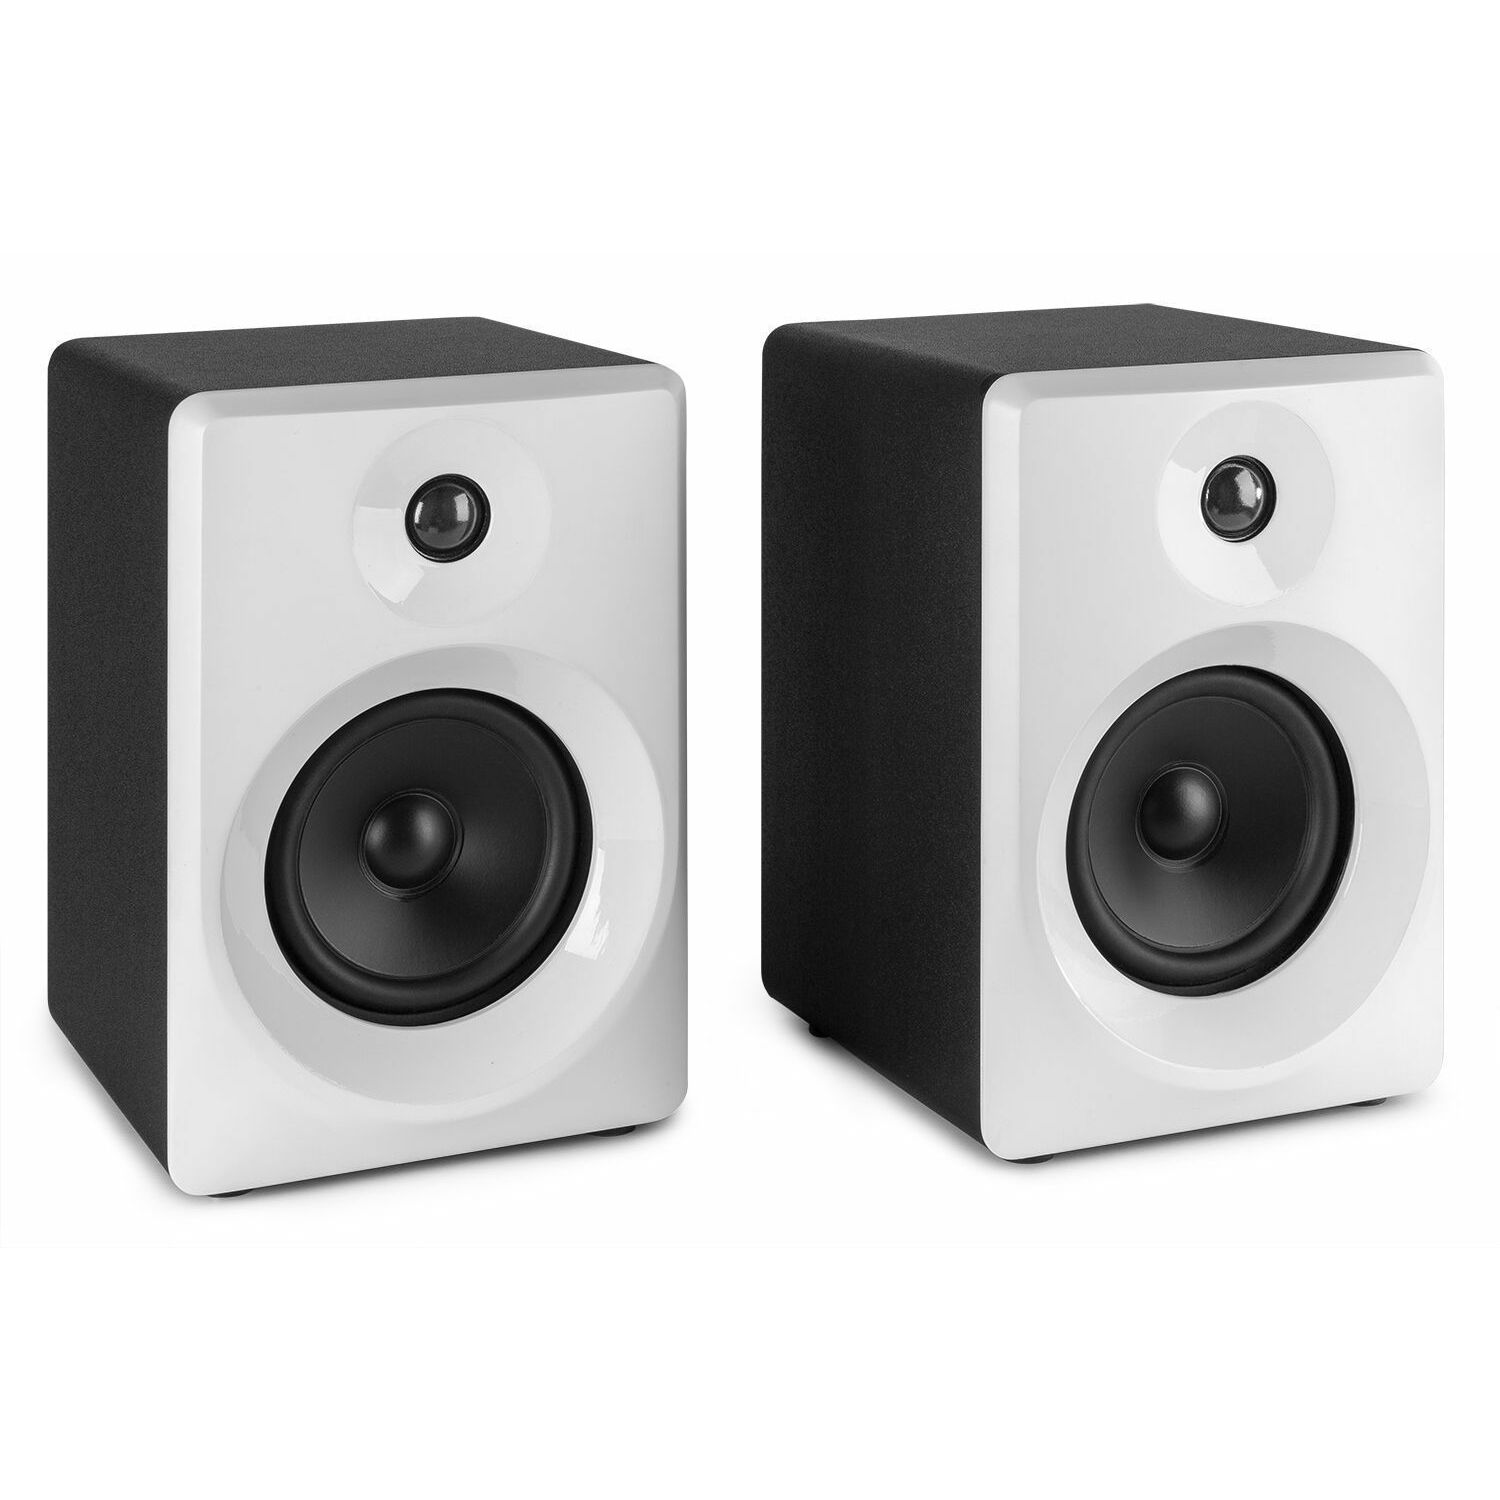 Retourdeal - Vonyx SMN50W actieve studio monitor speakers 140W - Wit